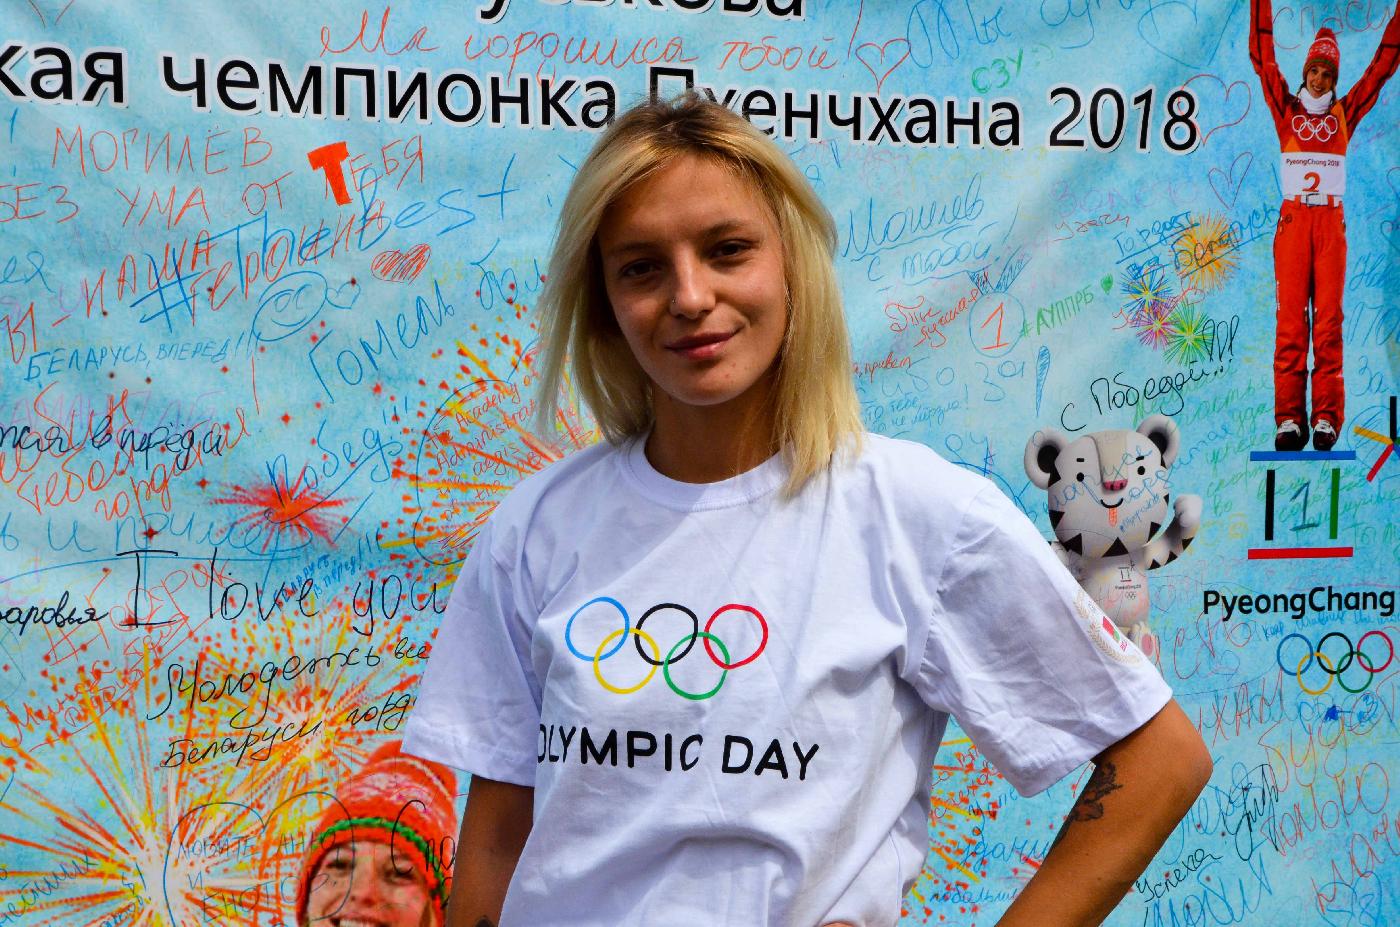 Olympic Day through eyes of Belarusian athletes 